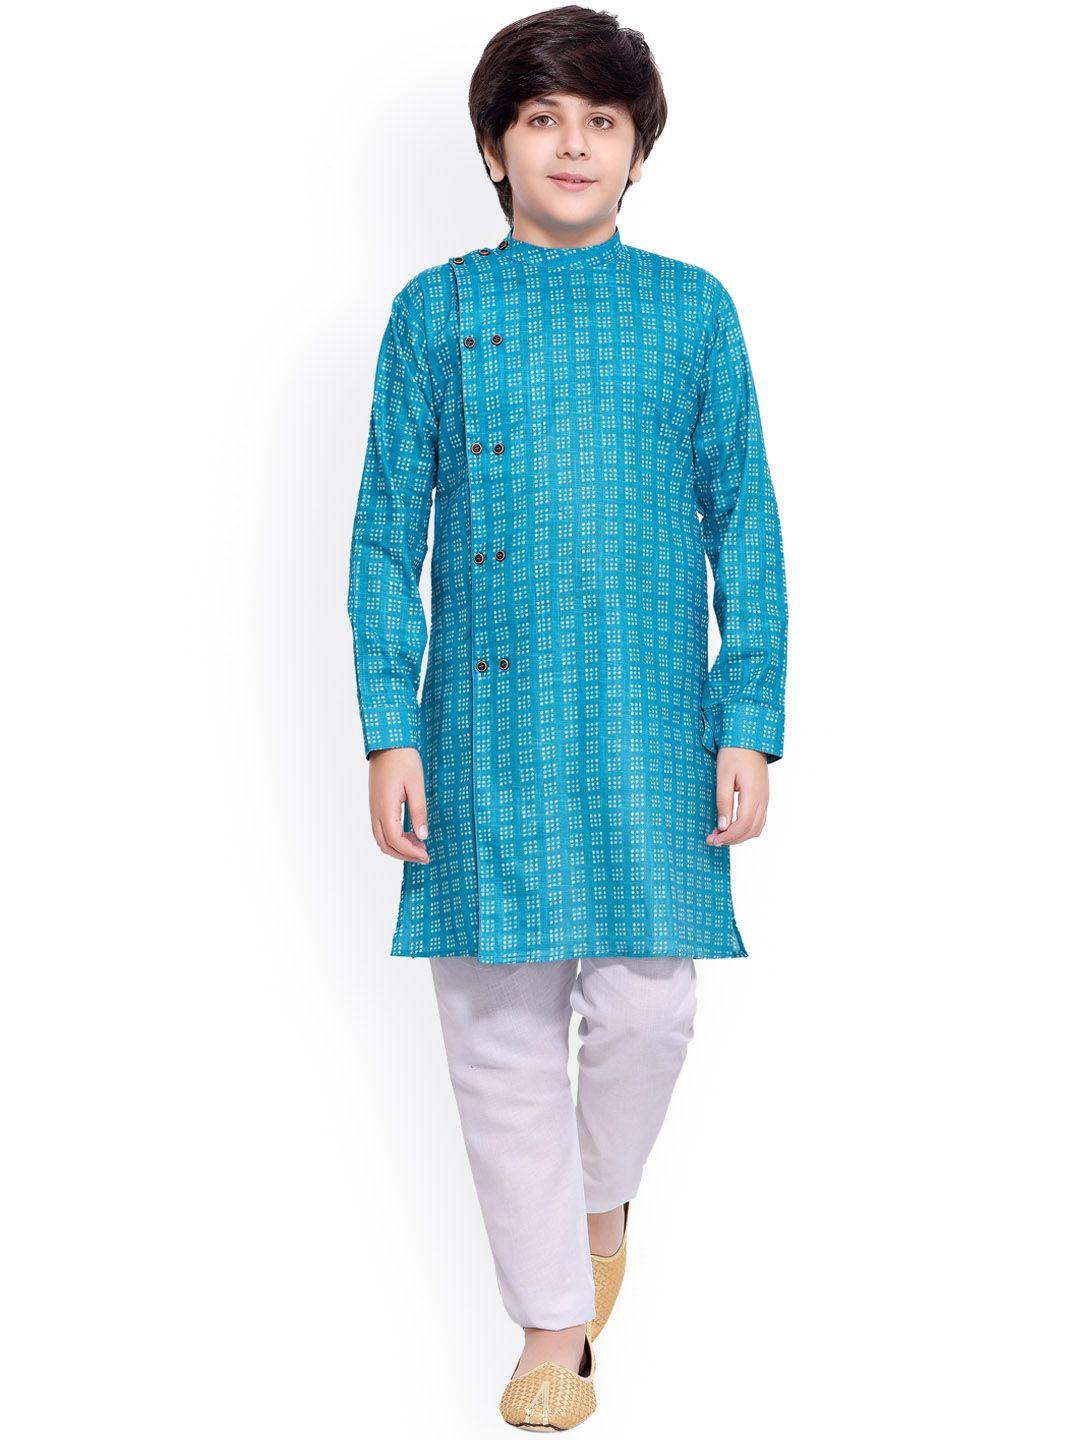 jeetethnics boys blue printed angrakha kurta with pyjamas